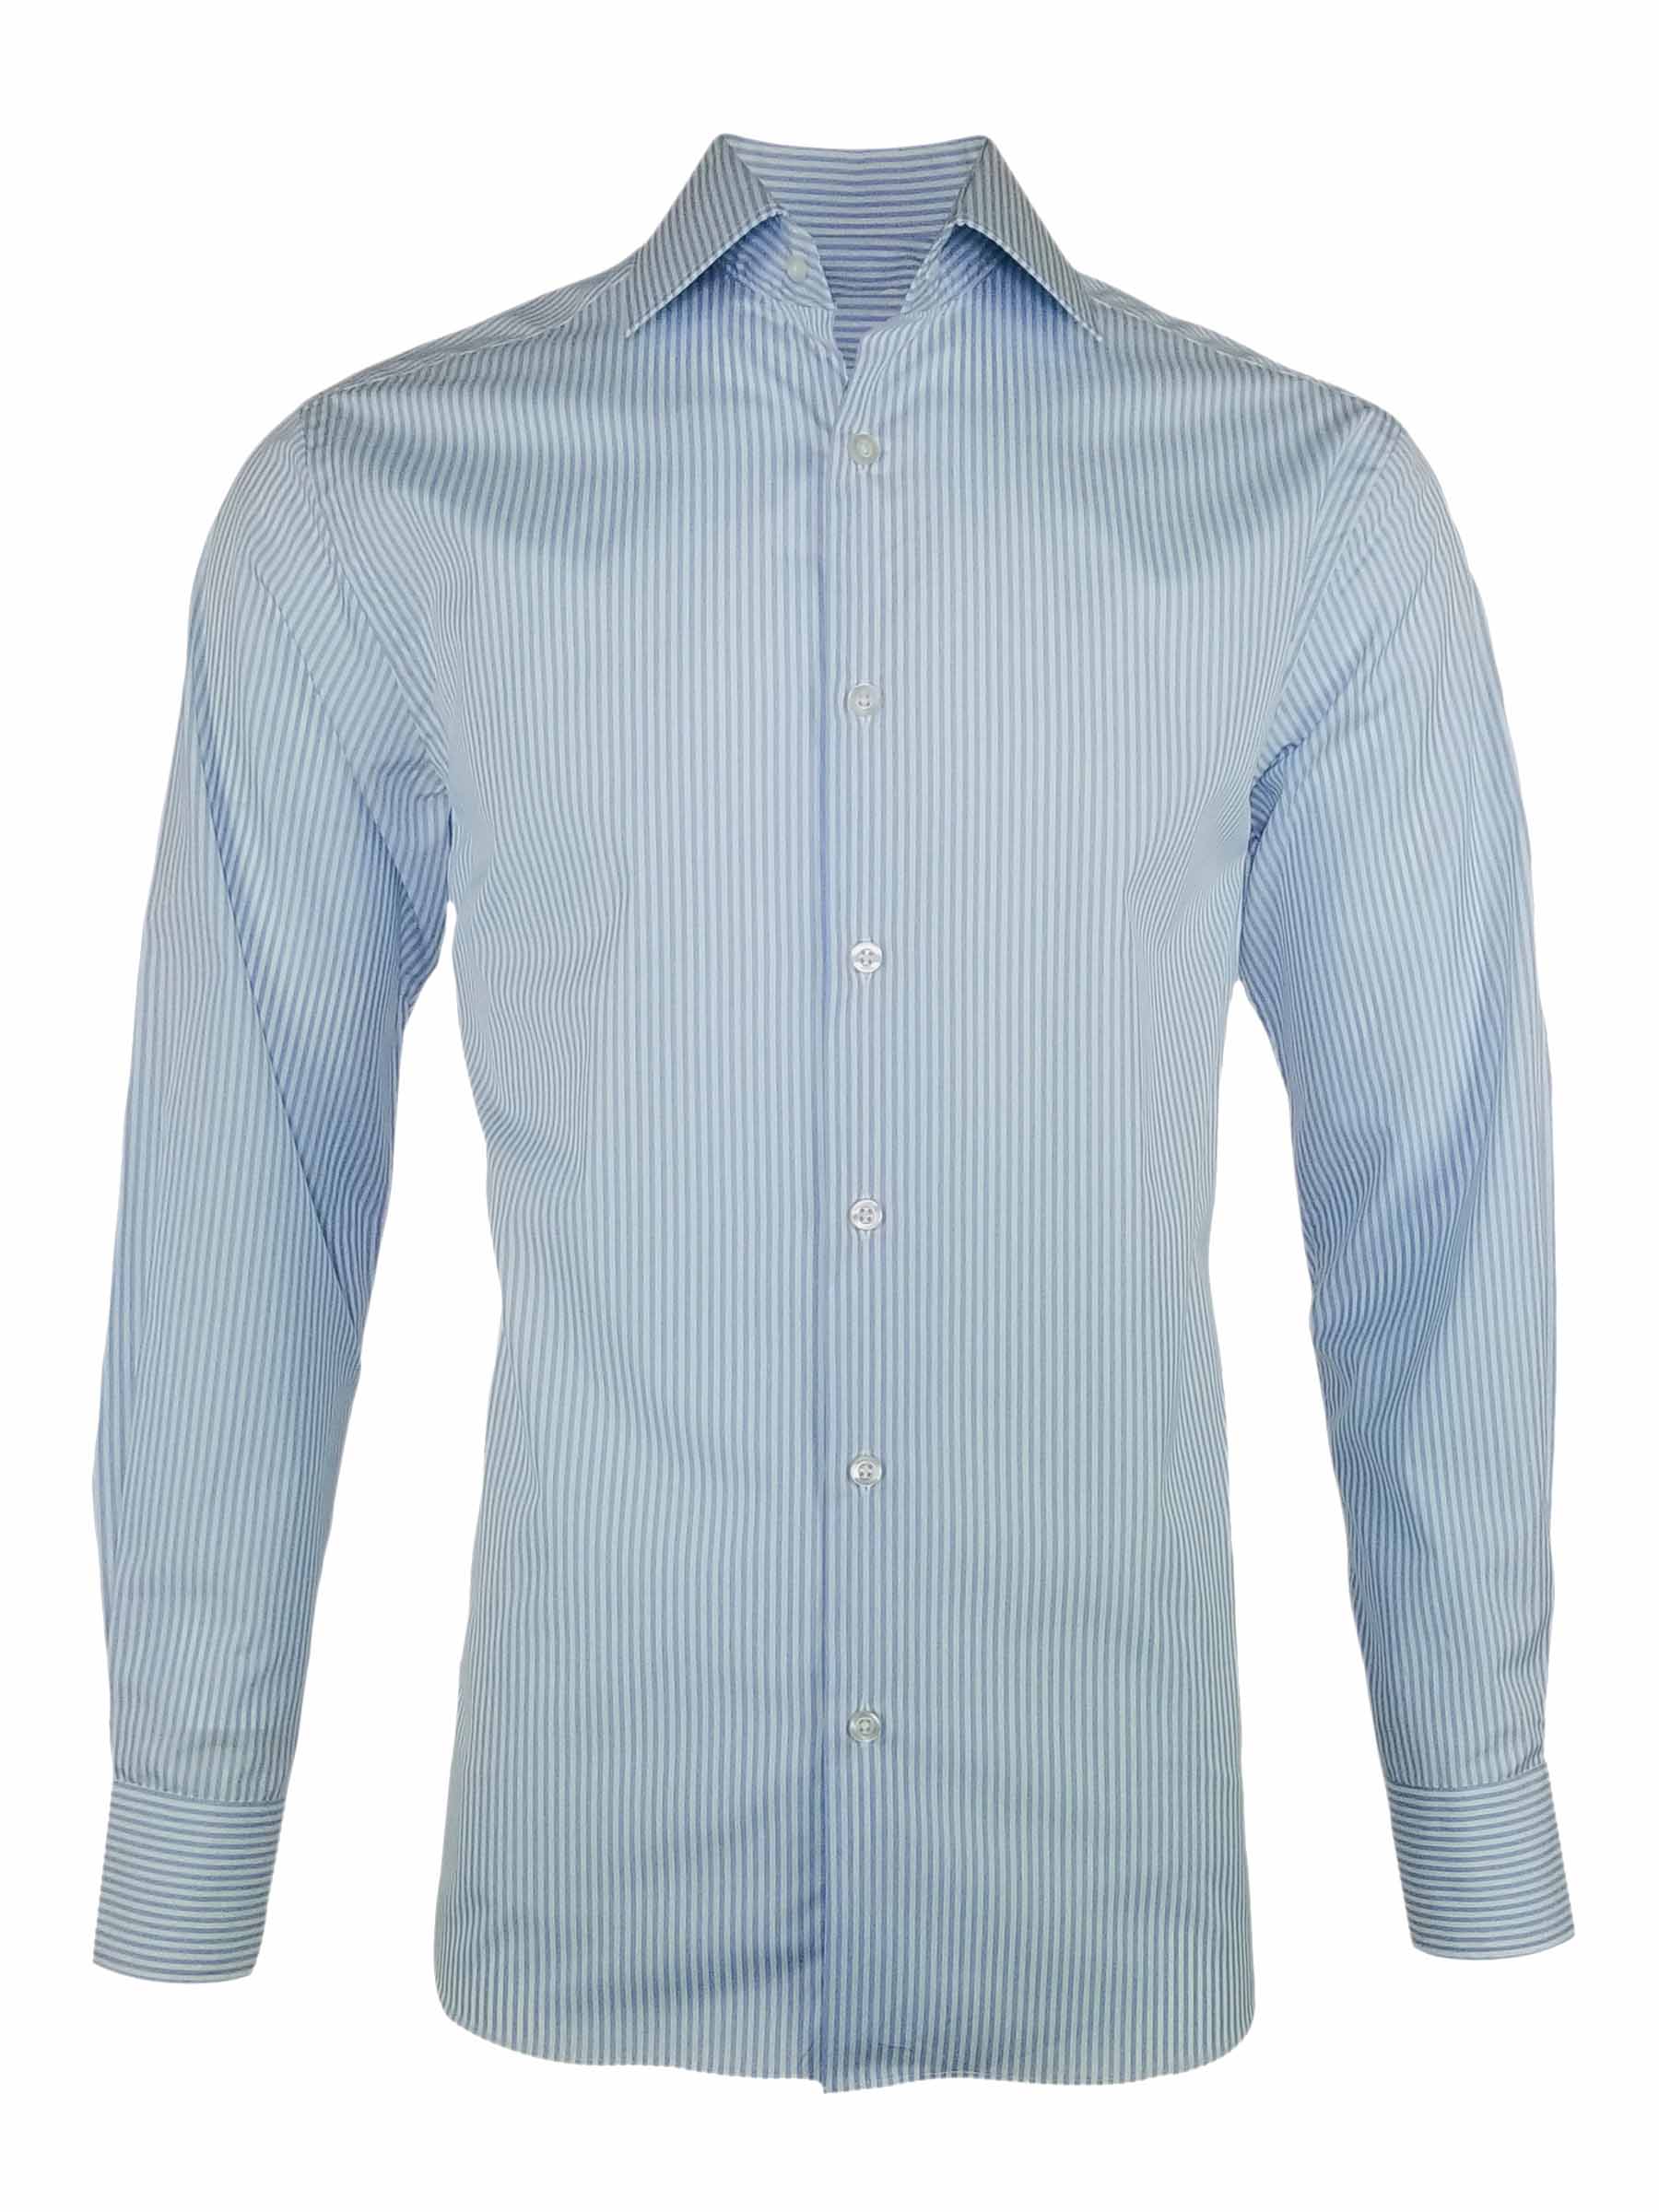 Men's Venice Stripe Shirt - Light Blue Stripe Long Sleeve - Uniform Edit